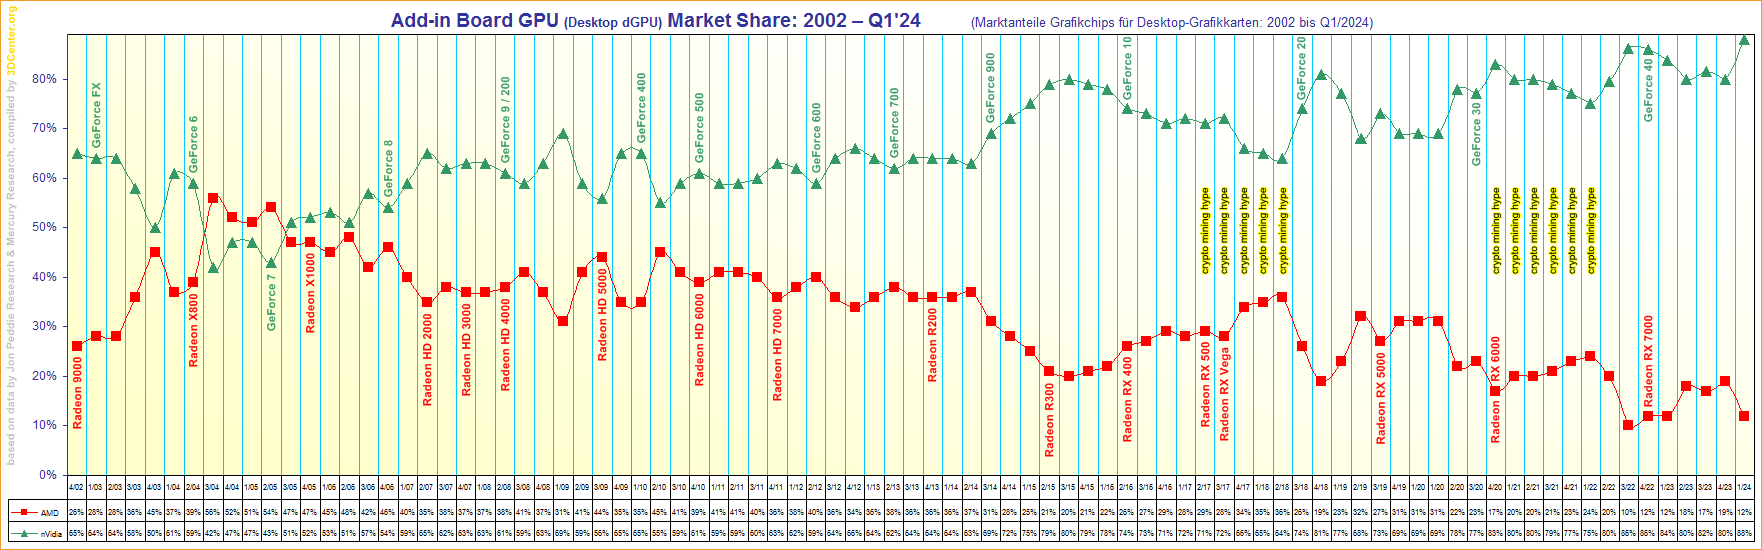 GPU-Add-in-Board-Market-Share-2002-to-Q1